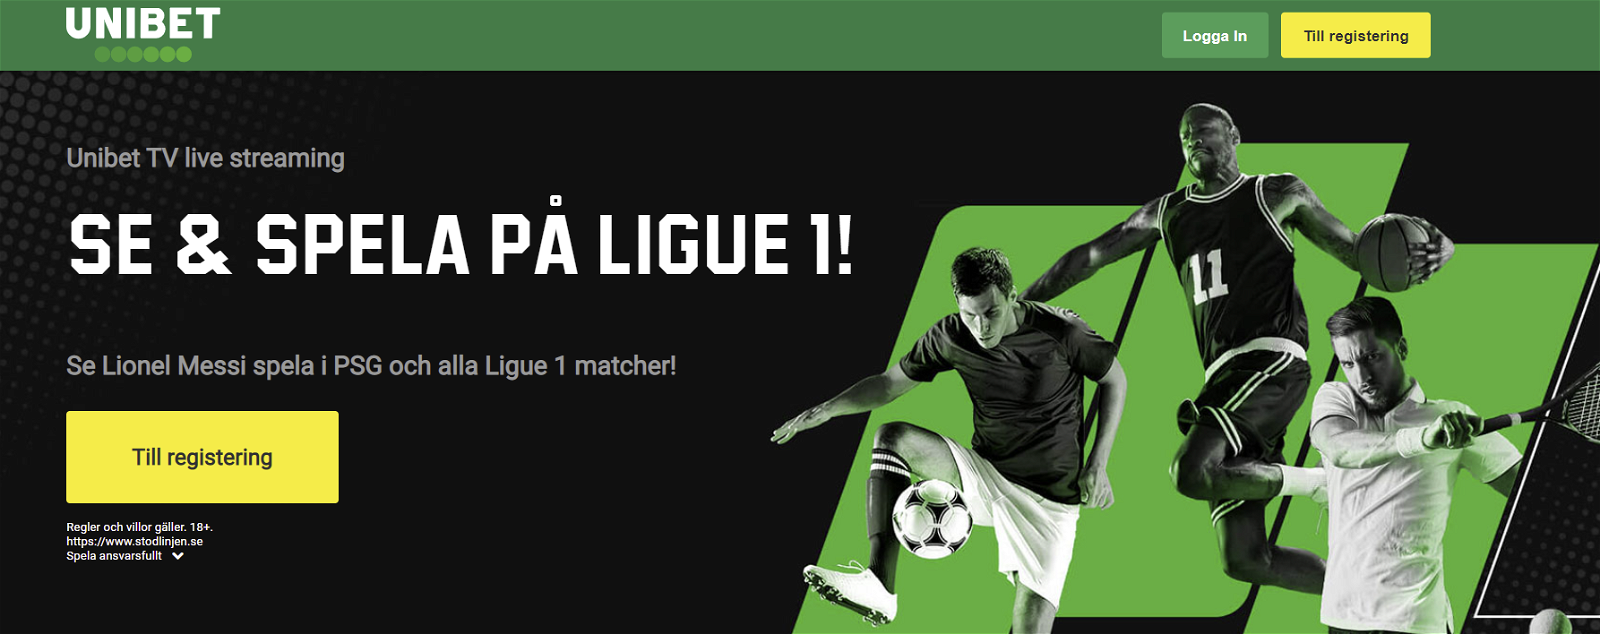 Spelschema Ligue 1 2022 - komplett Ligue 1 spelschema 2021/22!